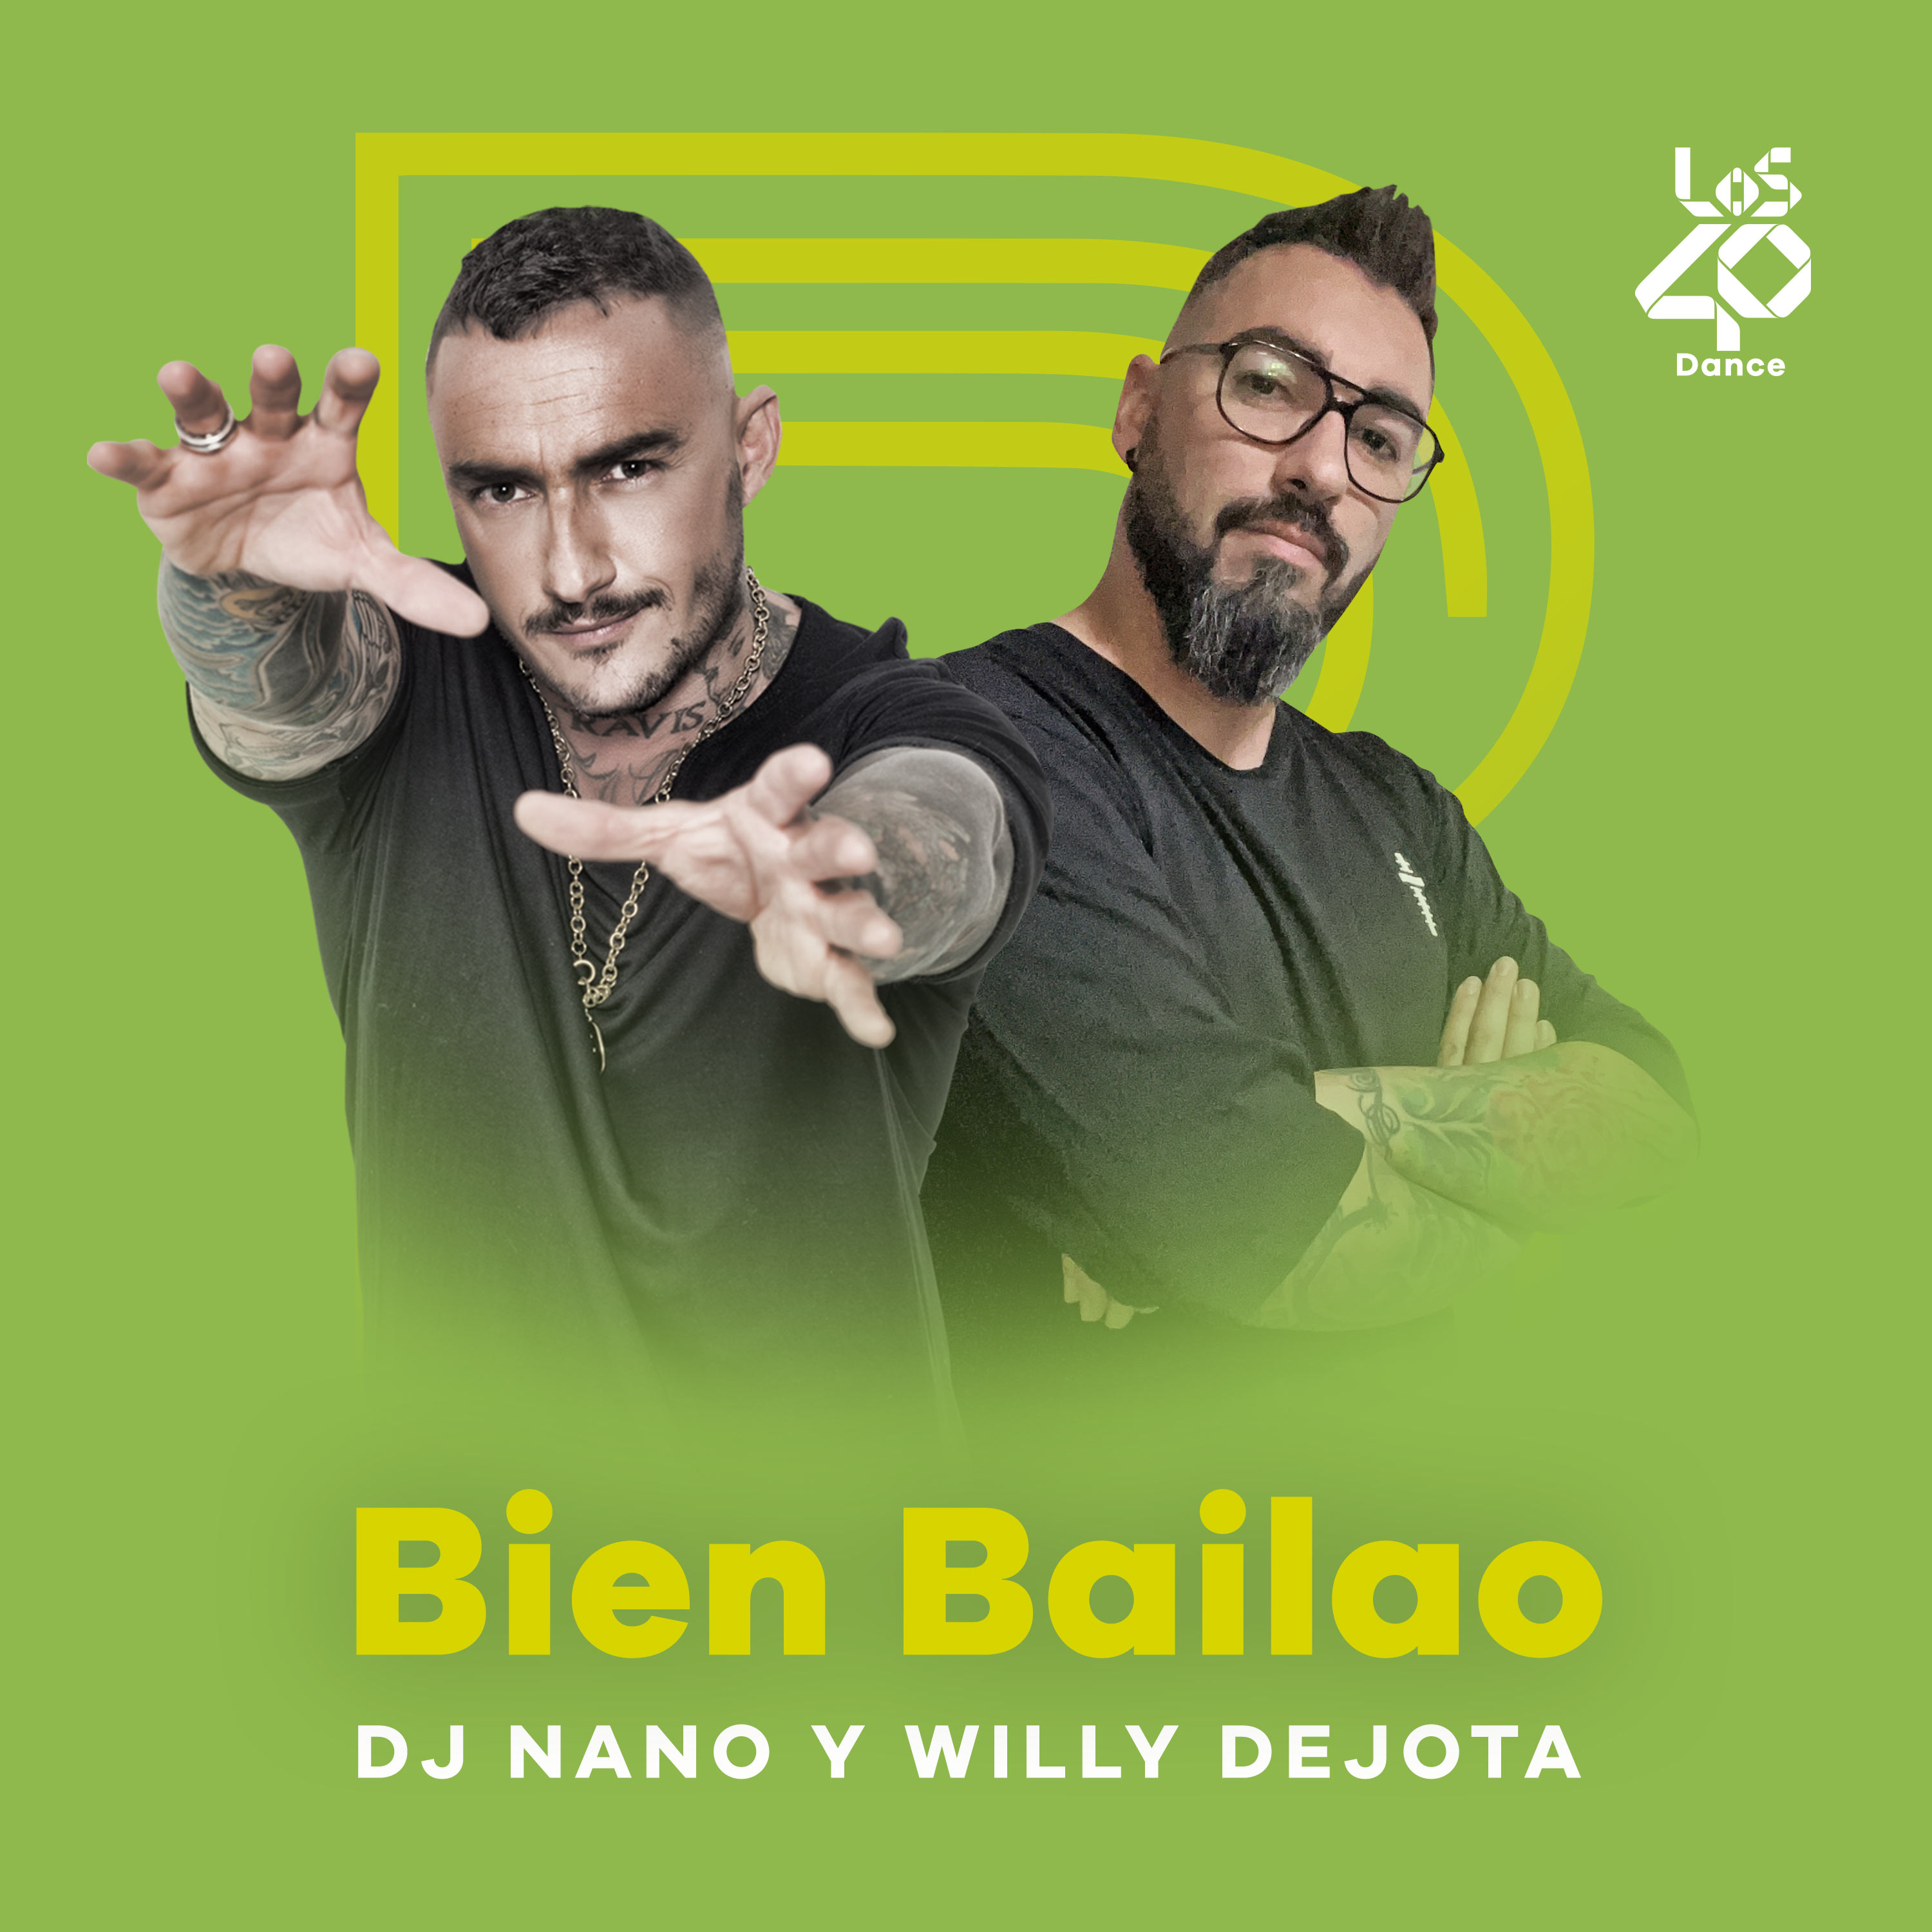 Bien Bailao by DJ Nano, 22-23h - 08/04/2022